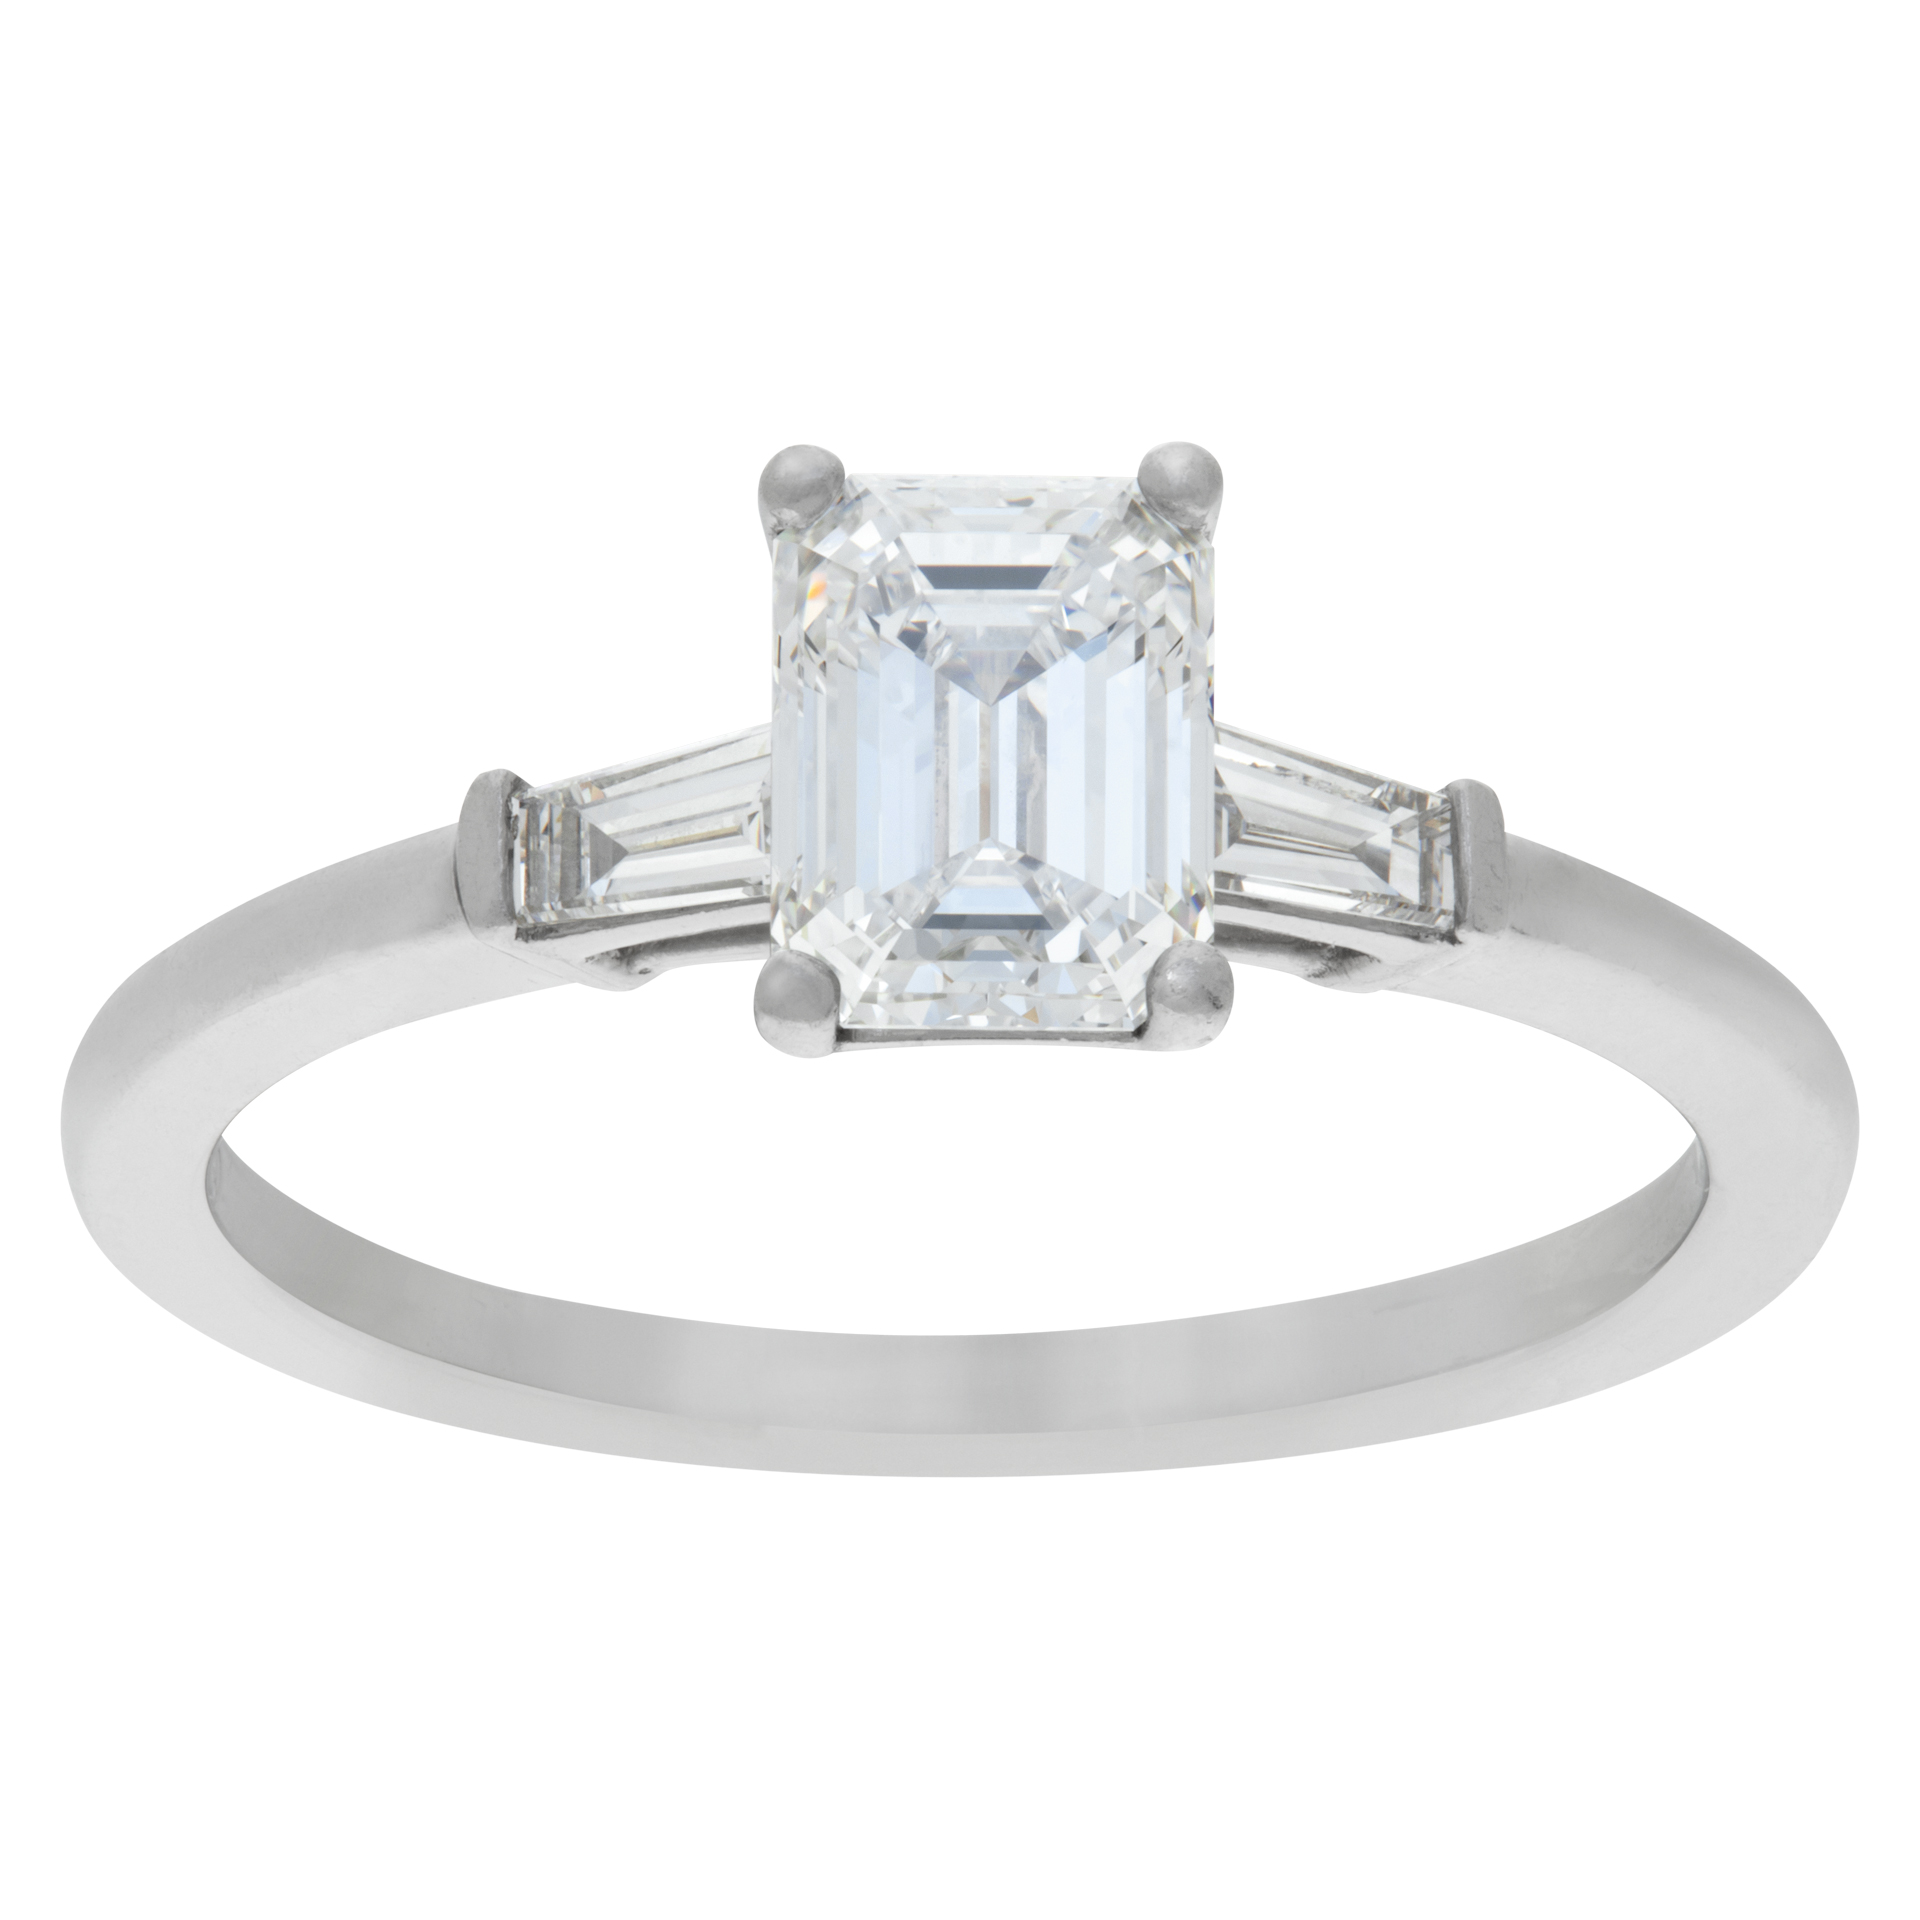 GIA certified emerald cut diamond 1.04 carat (D color, VVS2 clarity) ring in platinum image 1